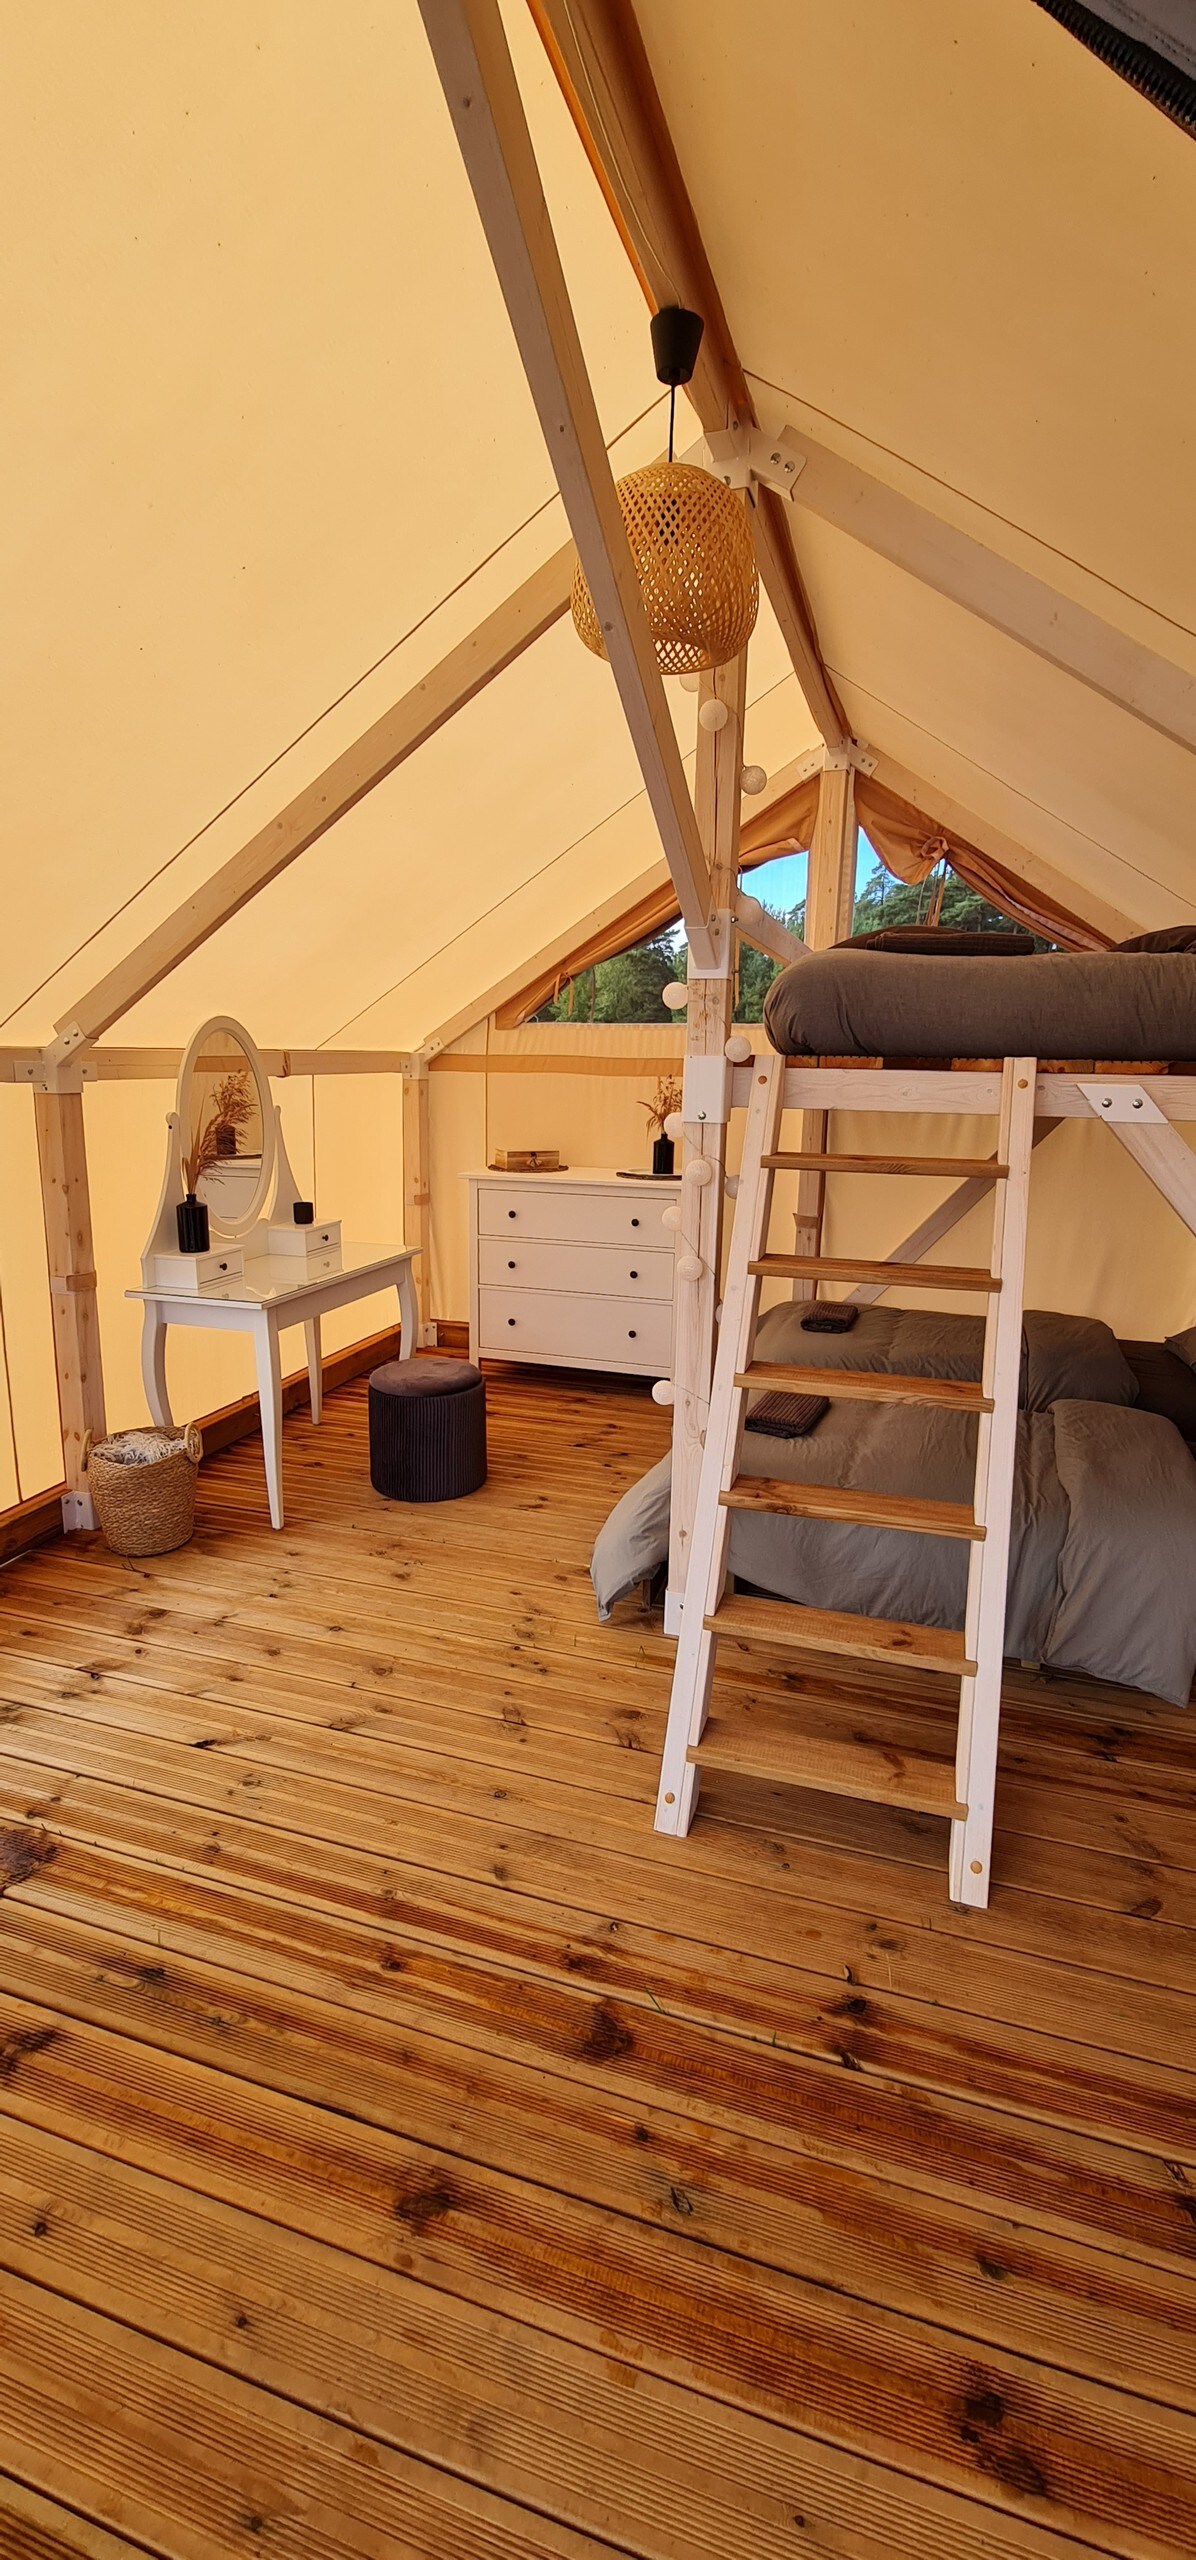 BB camping - Glamping tent